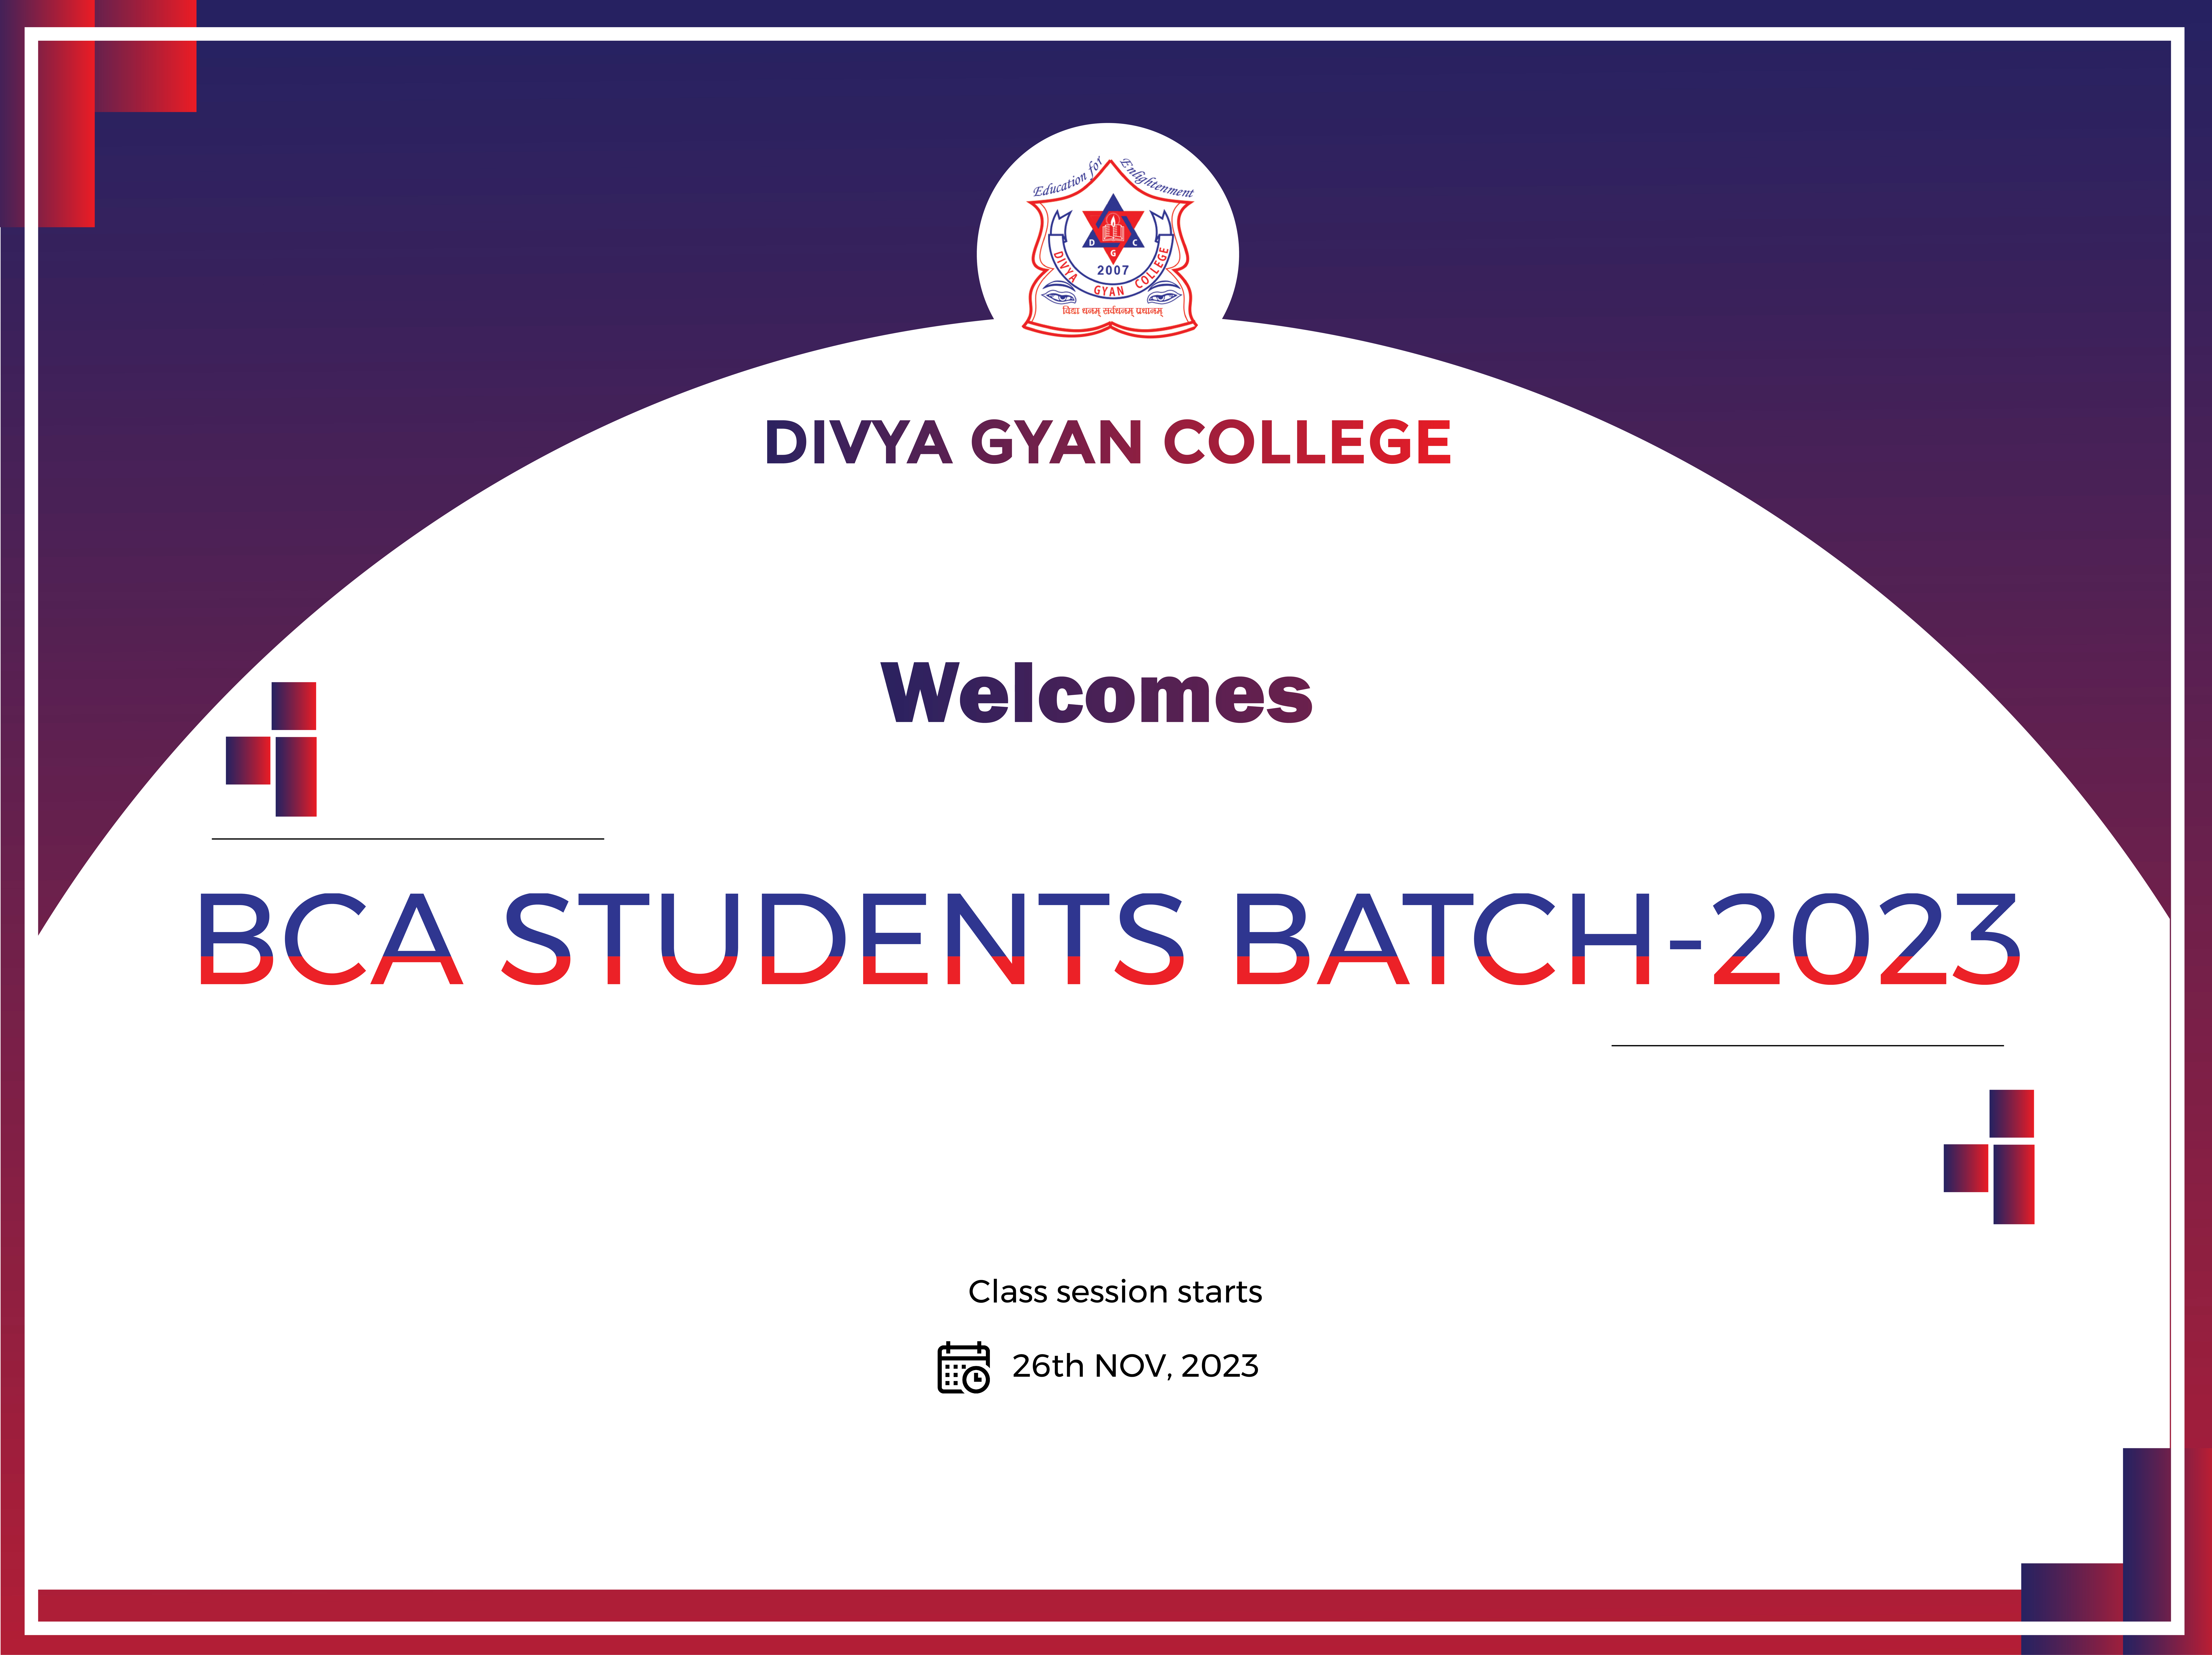 Divya Gyan College welcomes BCA 6th batch students